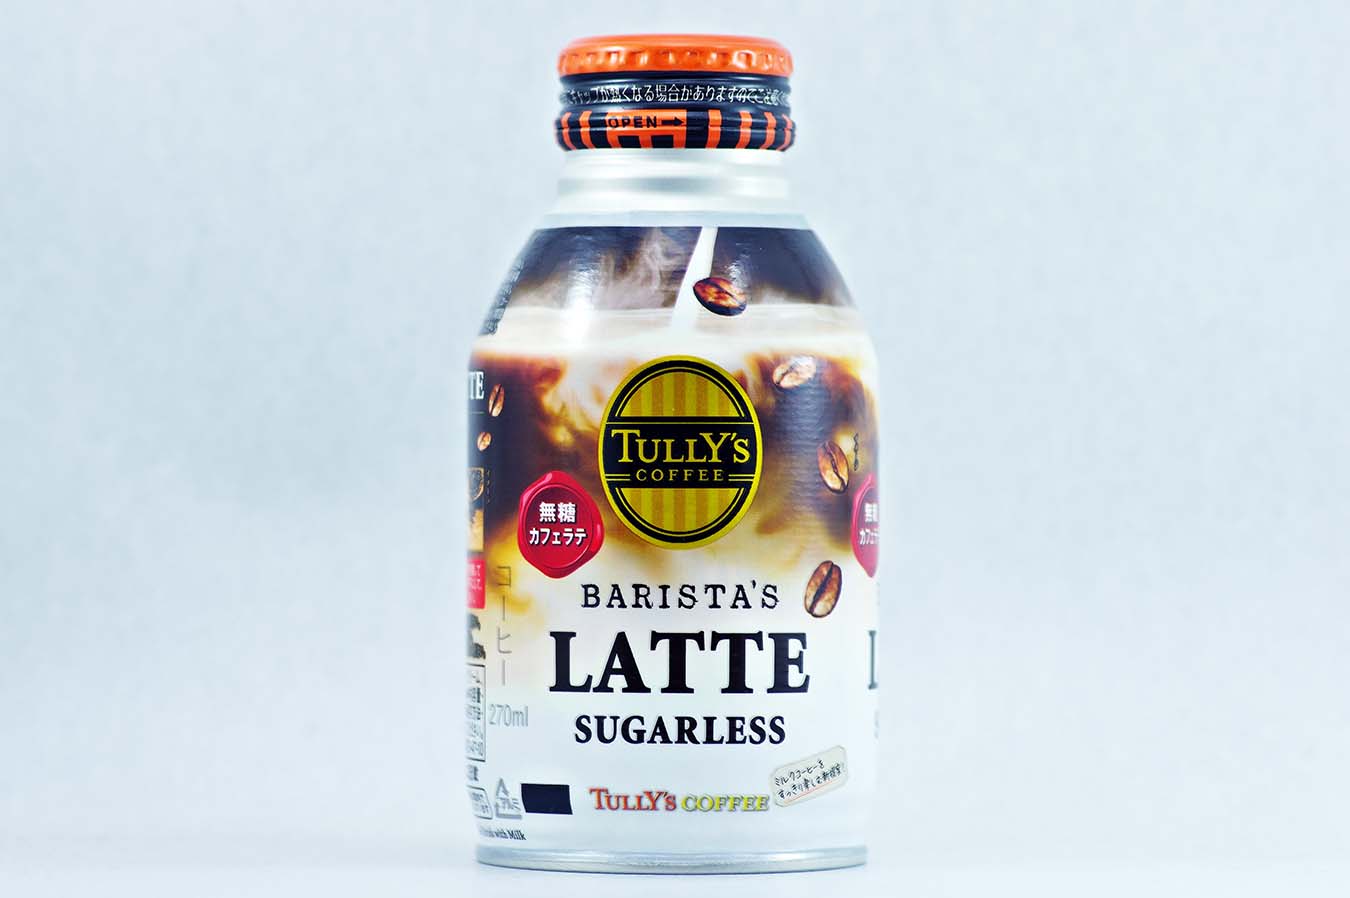 TULLY'S COFFEE BARISTA'S LATTE SUGARLESS 270mlボトル缶 2015年10月